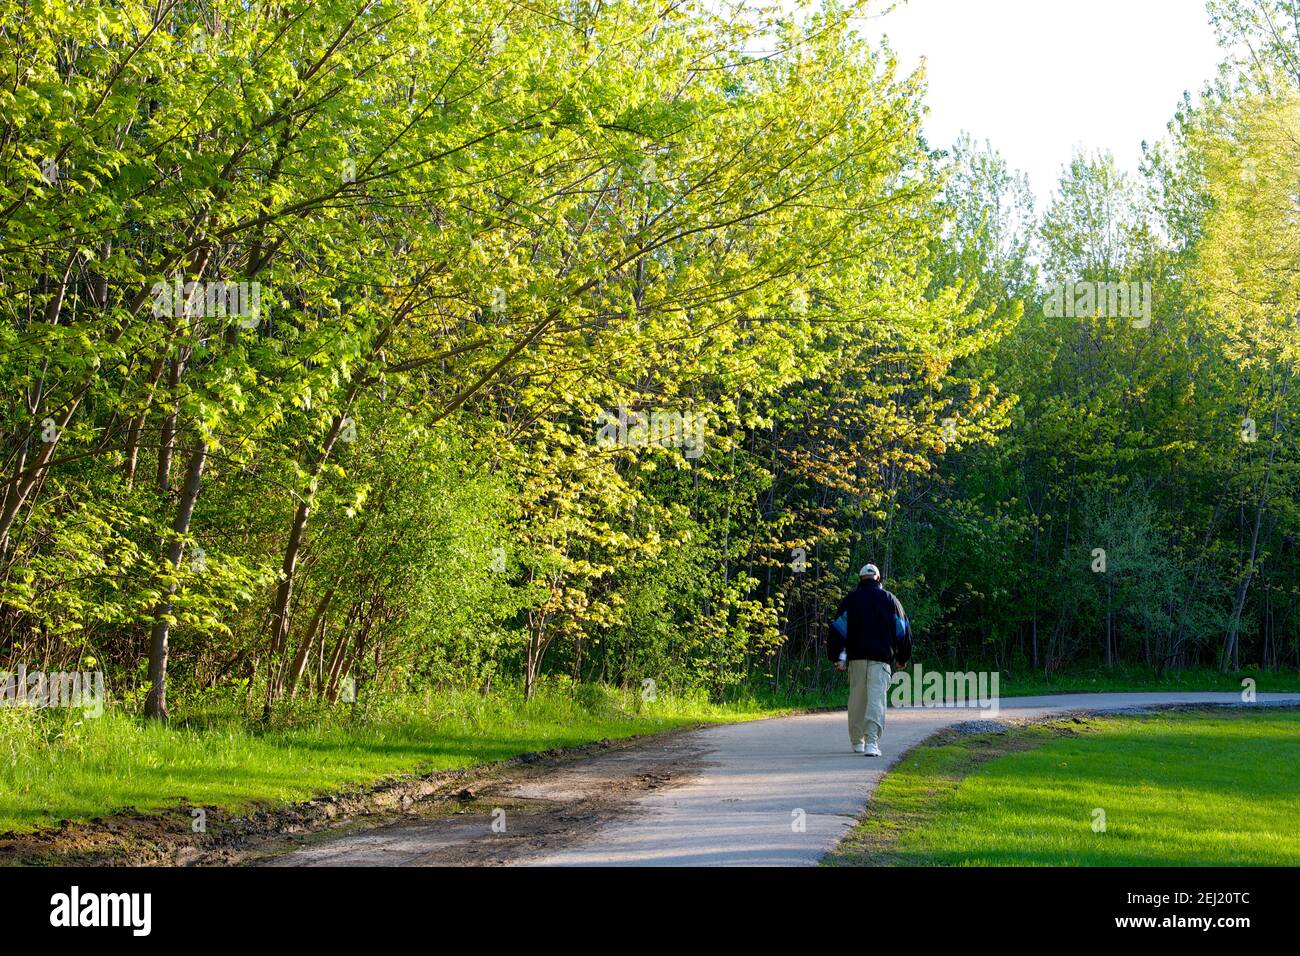 Toronto, Ontario / Canada - 05-22-2014: Loney man walking in the public park in springtime. Stock Photo